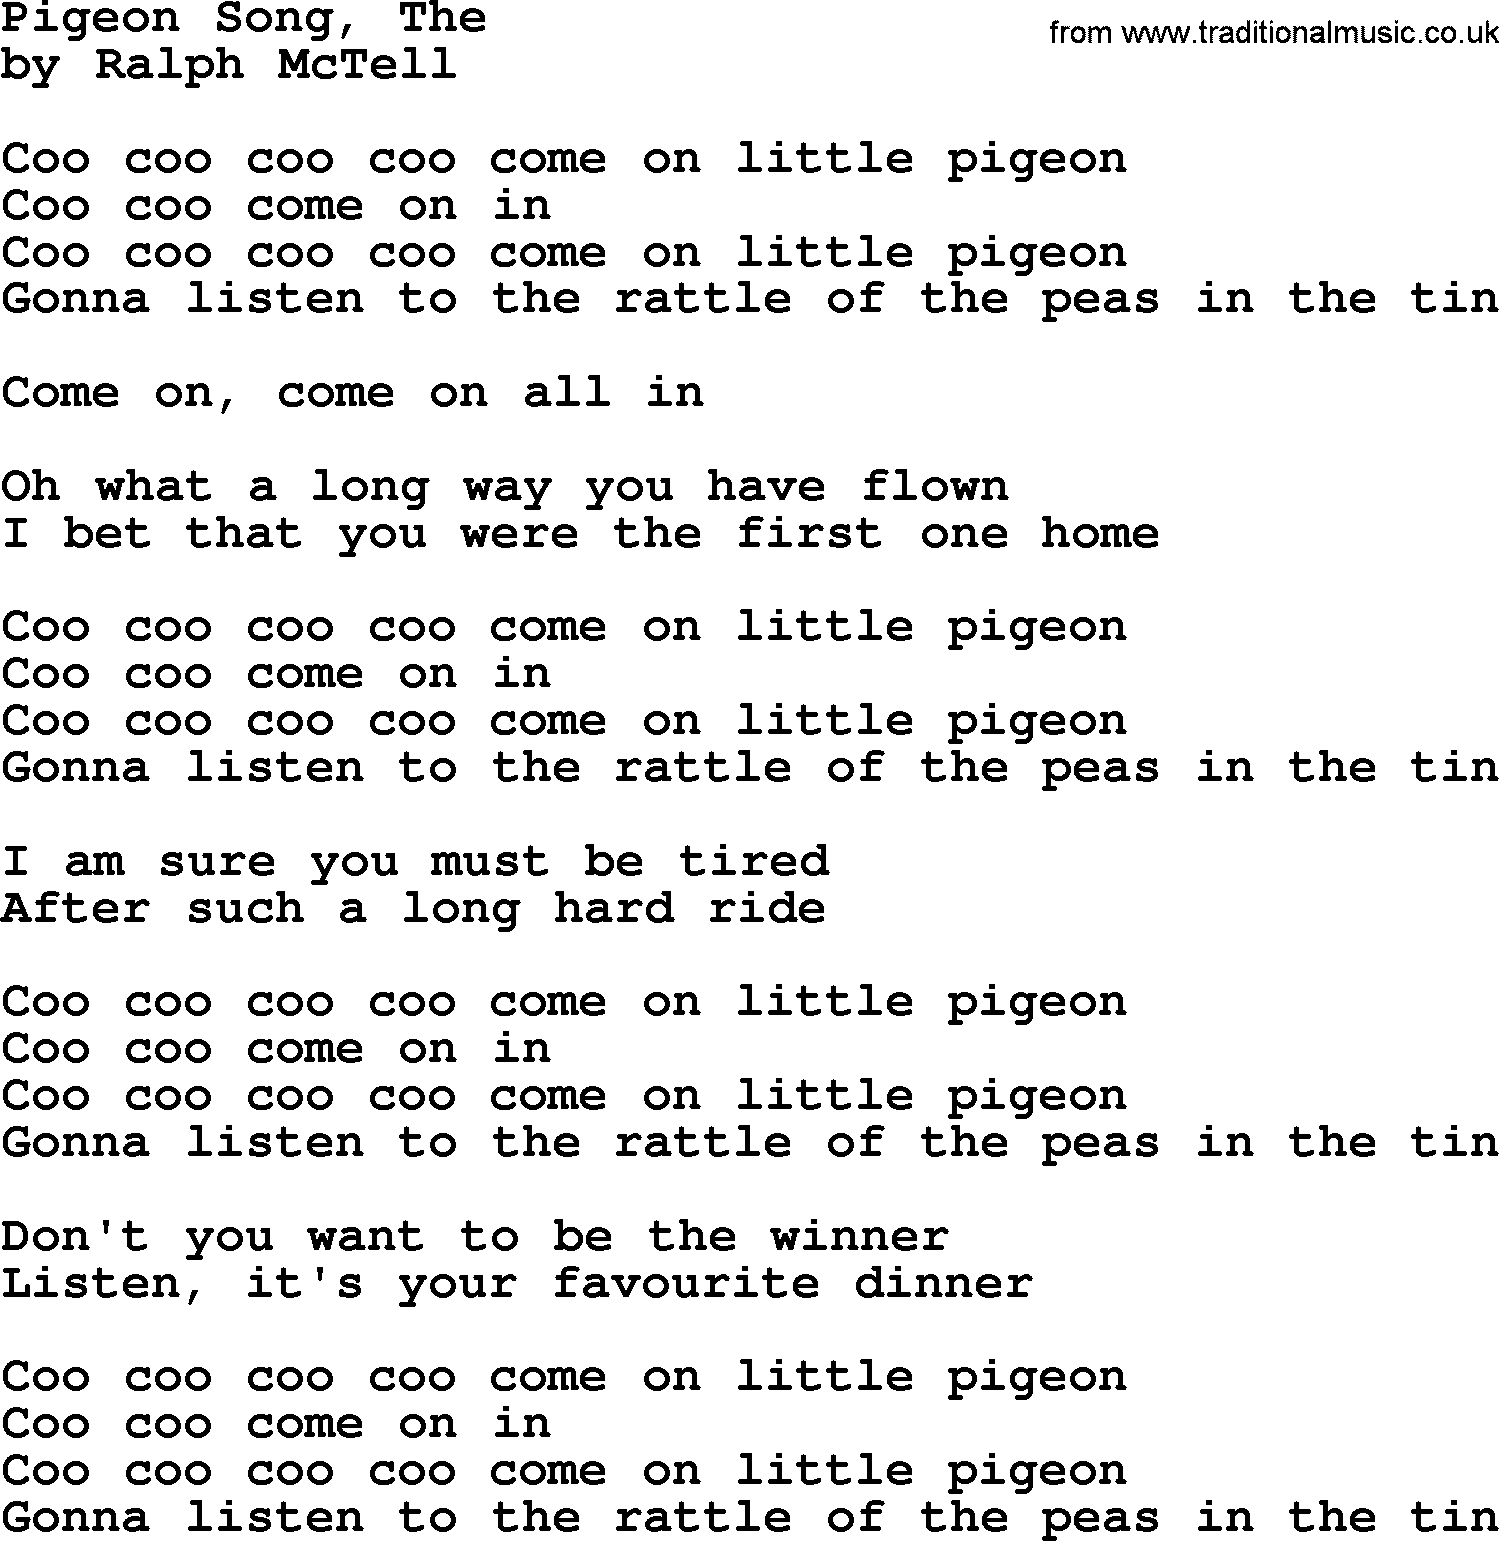 Ralph McTell Song: Pigeon Song, The, lyrics